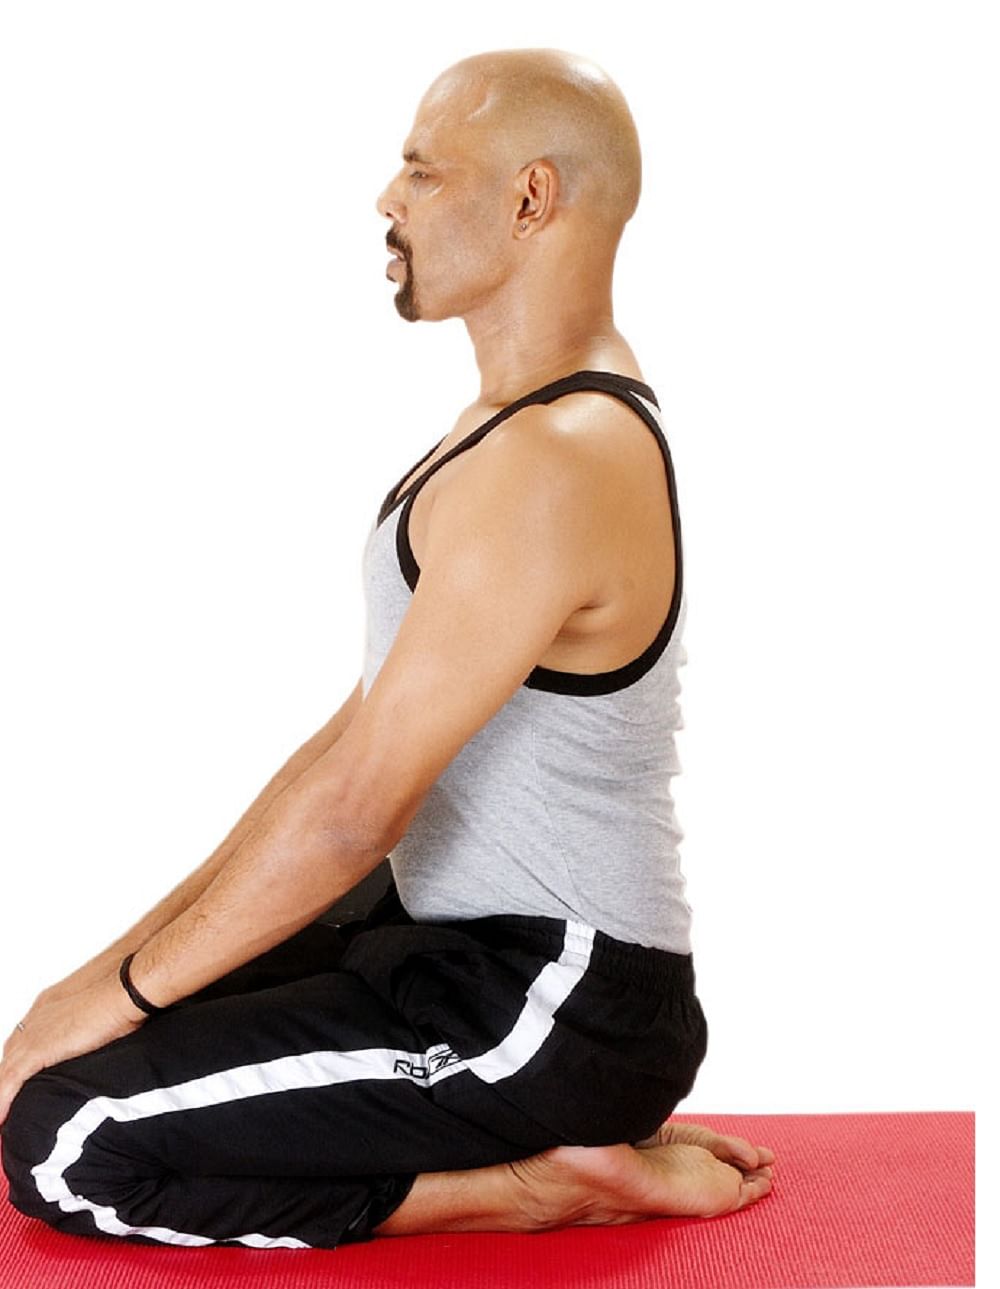 How to do Vajrasana (Thunderbolt Pose) and Their Health Benefits